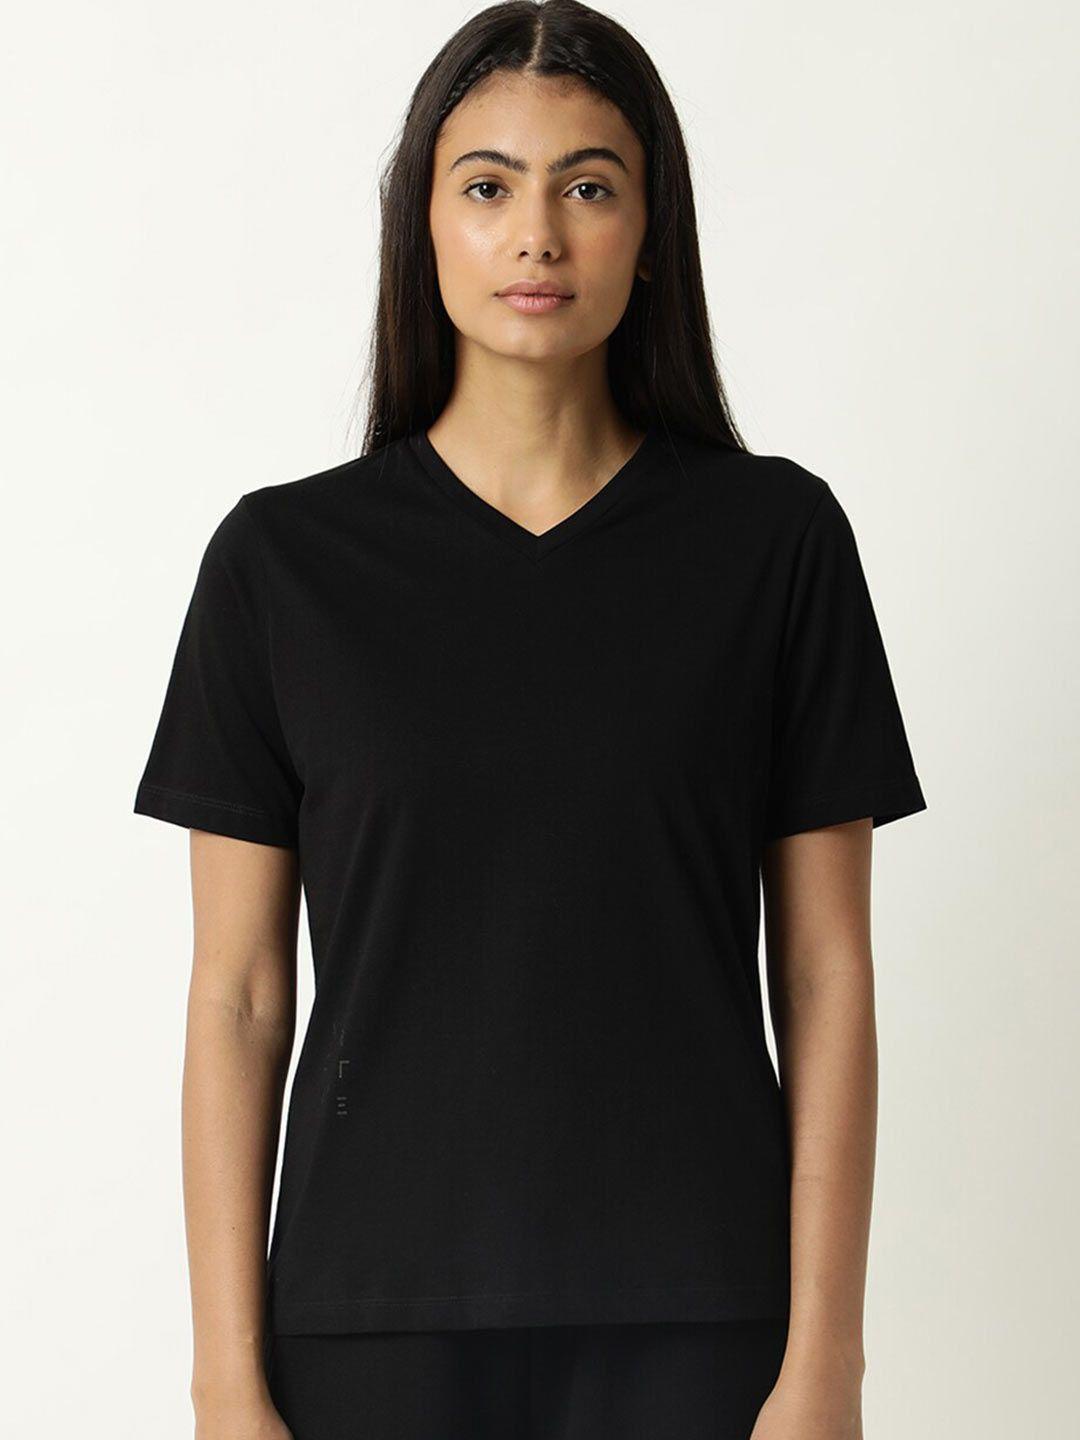 articale women black v-neck slim fit t-shirt